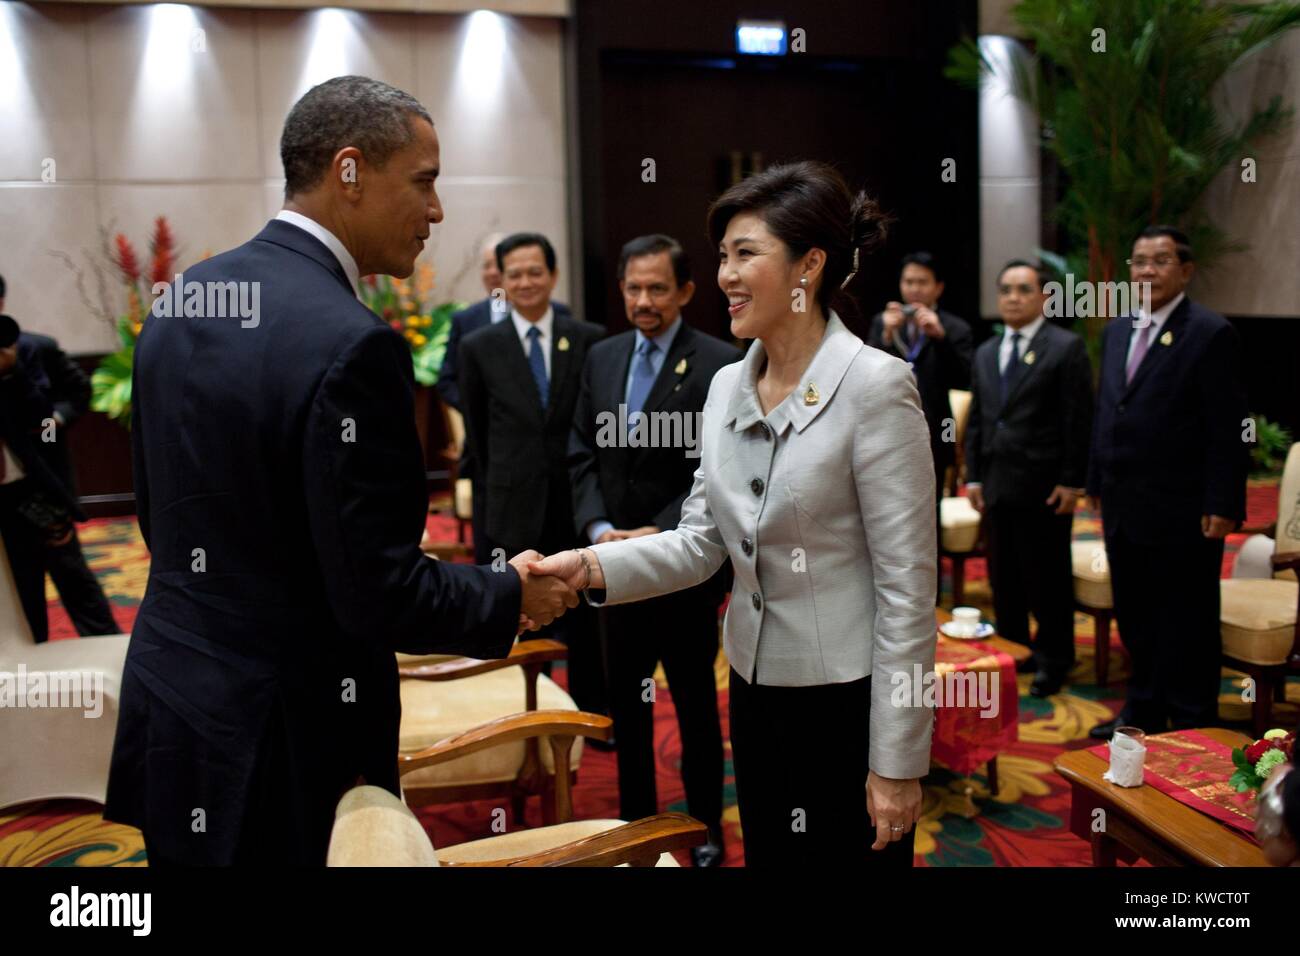 Us-Präsident Barack Obama begrüßt Ministerpräsident Yingluck Shinawatra von Thailand. An der ASEAN-Gipfel in Nusa Dua, Bali, Indonesien, November 18, 2011. (BSLOC 2015 3 143) Stockfoto